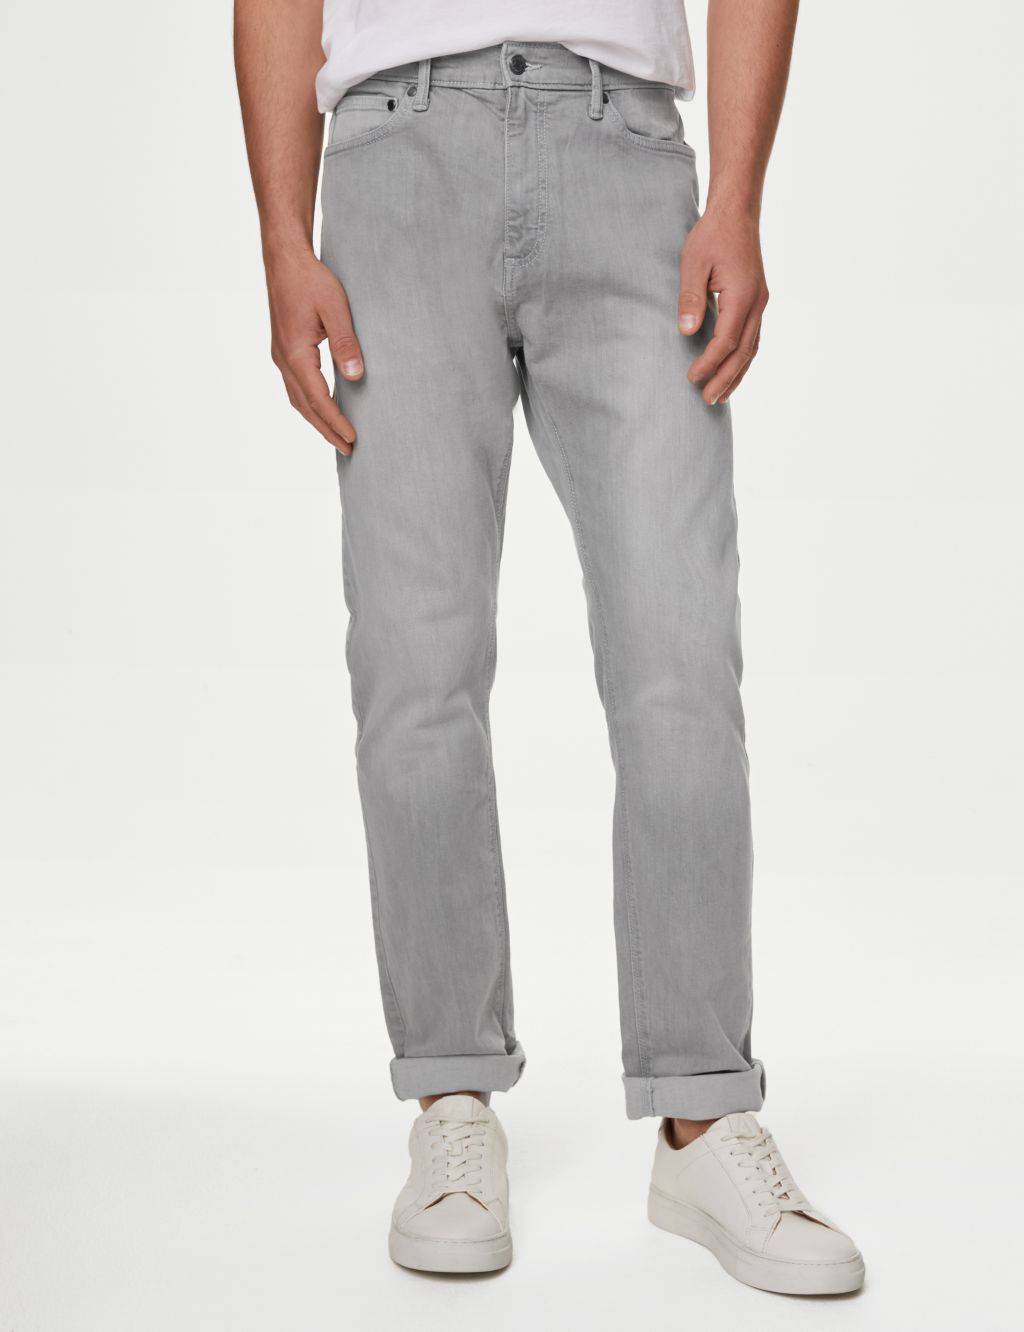 Men's Grey Jeans | M&S